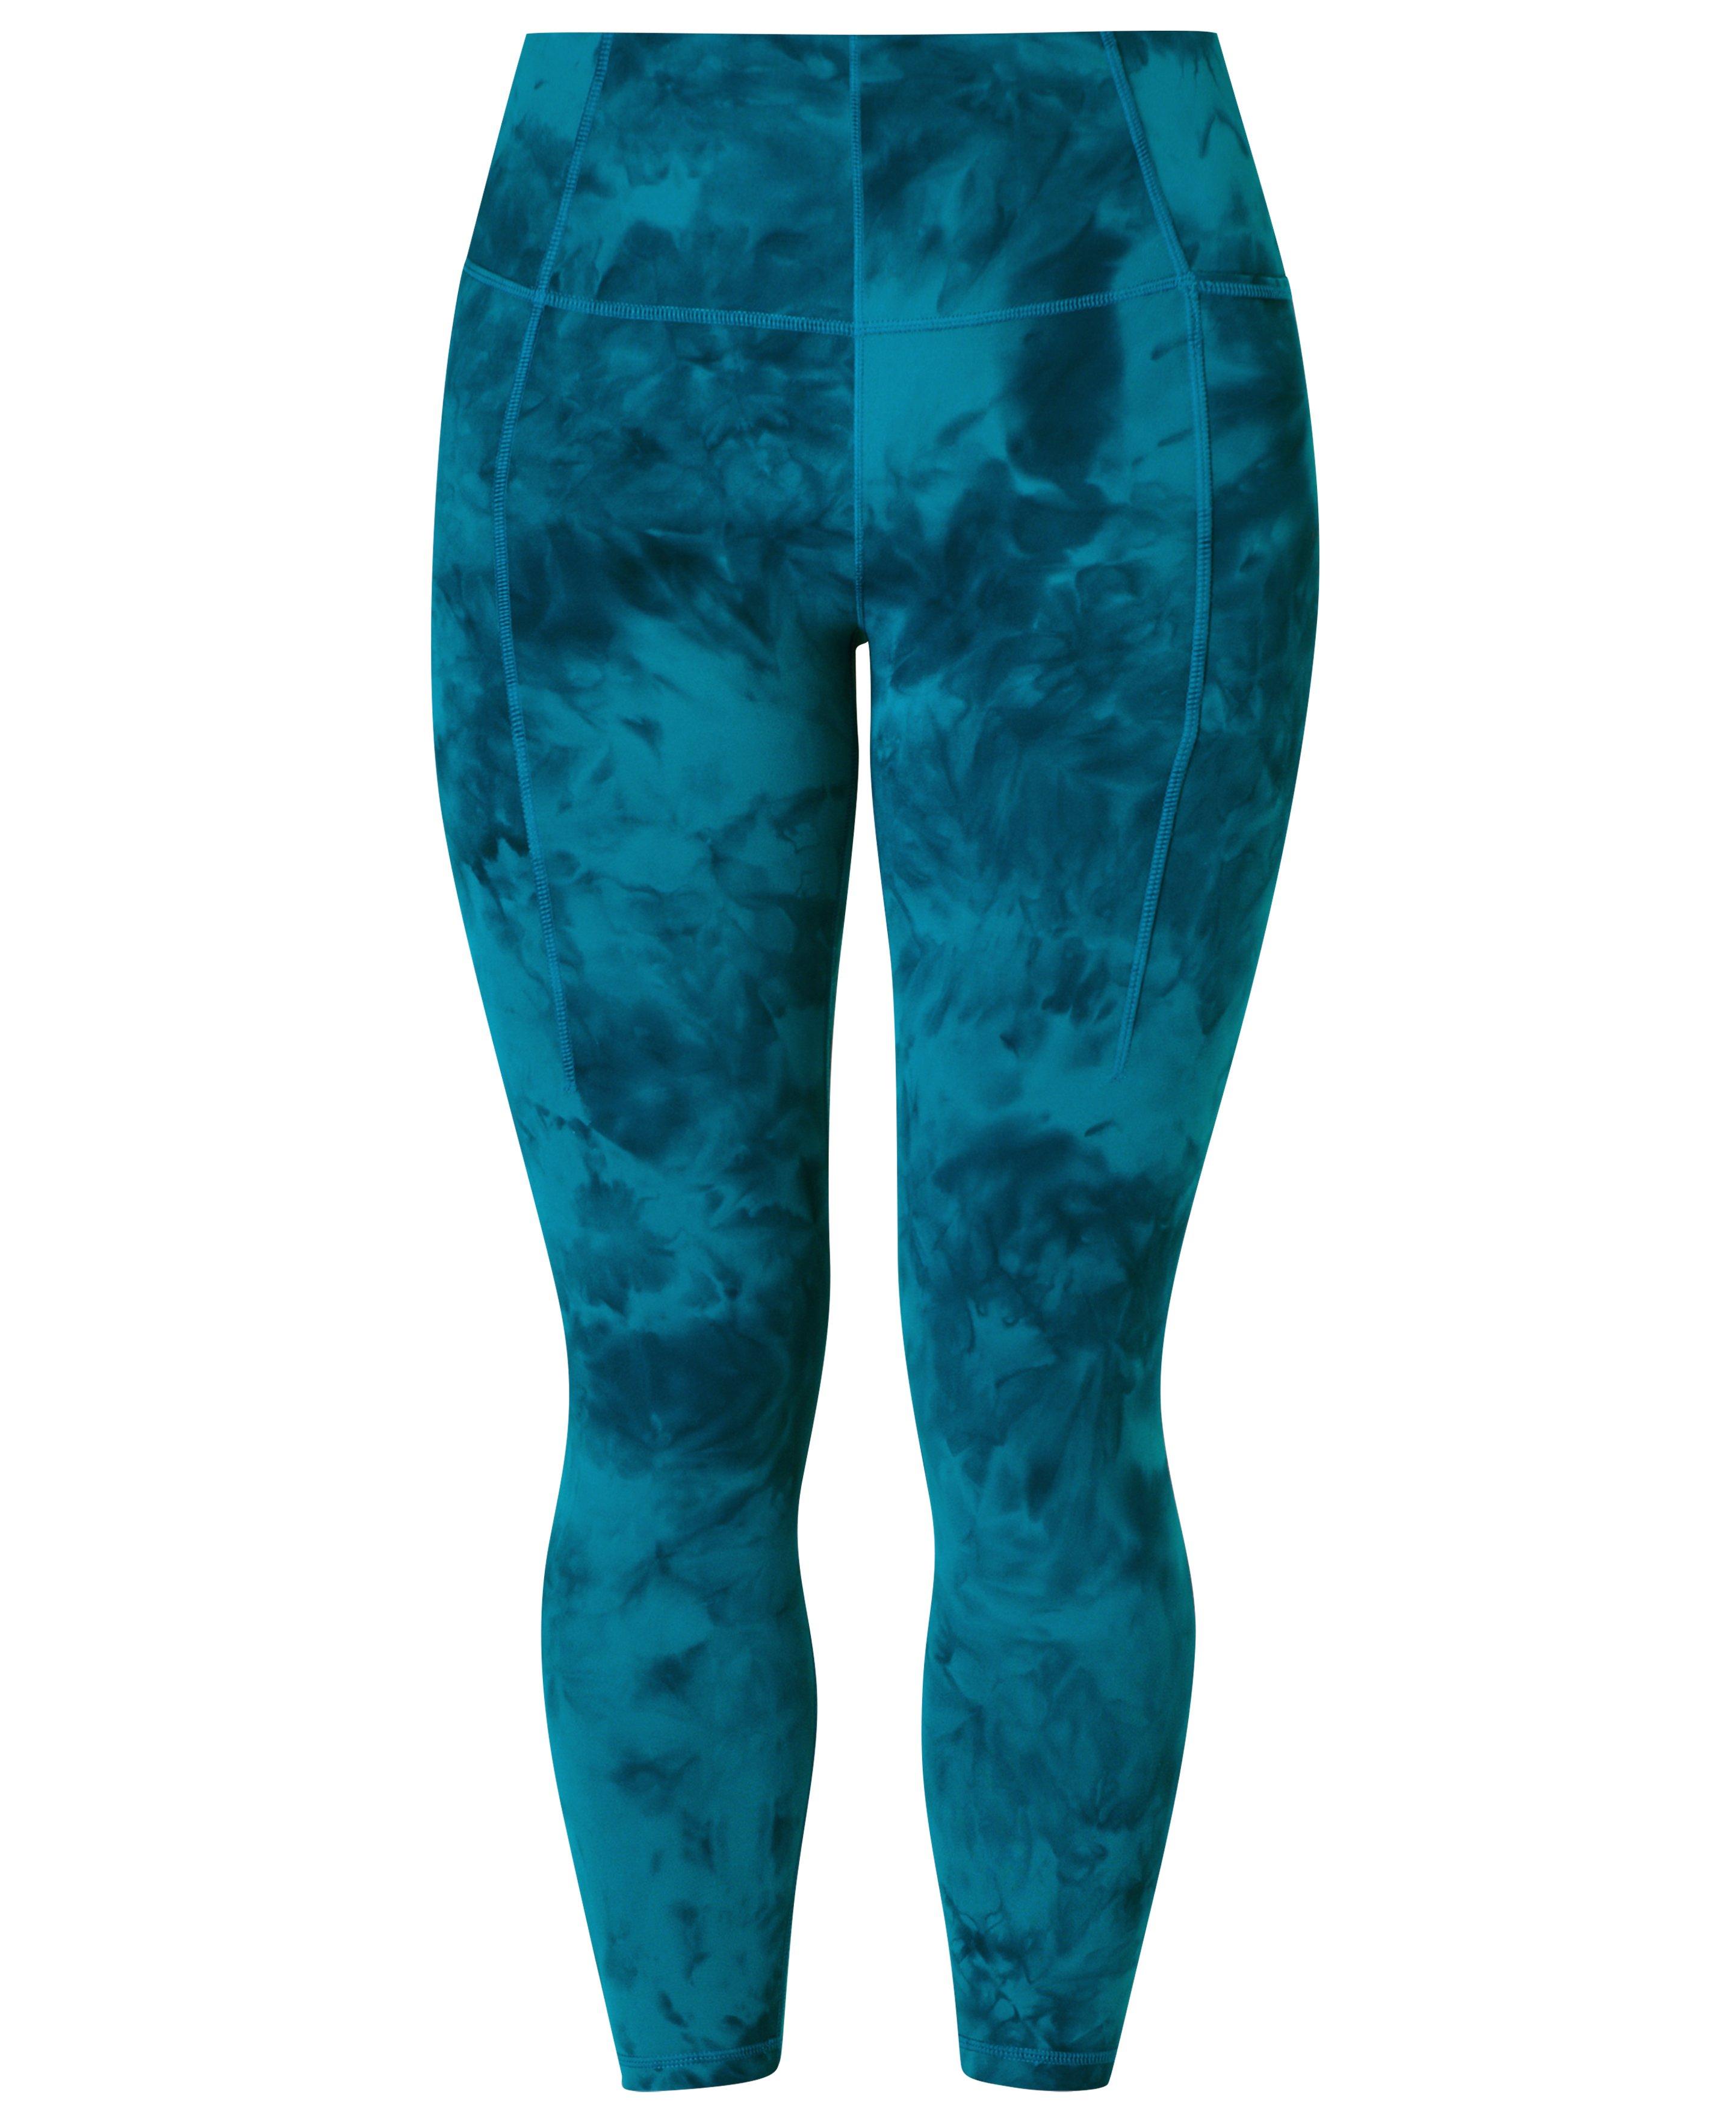 Super Soft Yoga Leggings - Reef Teal Blue Spray Dye